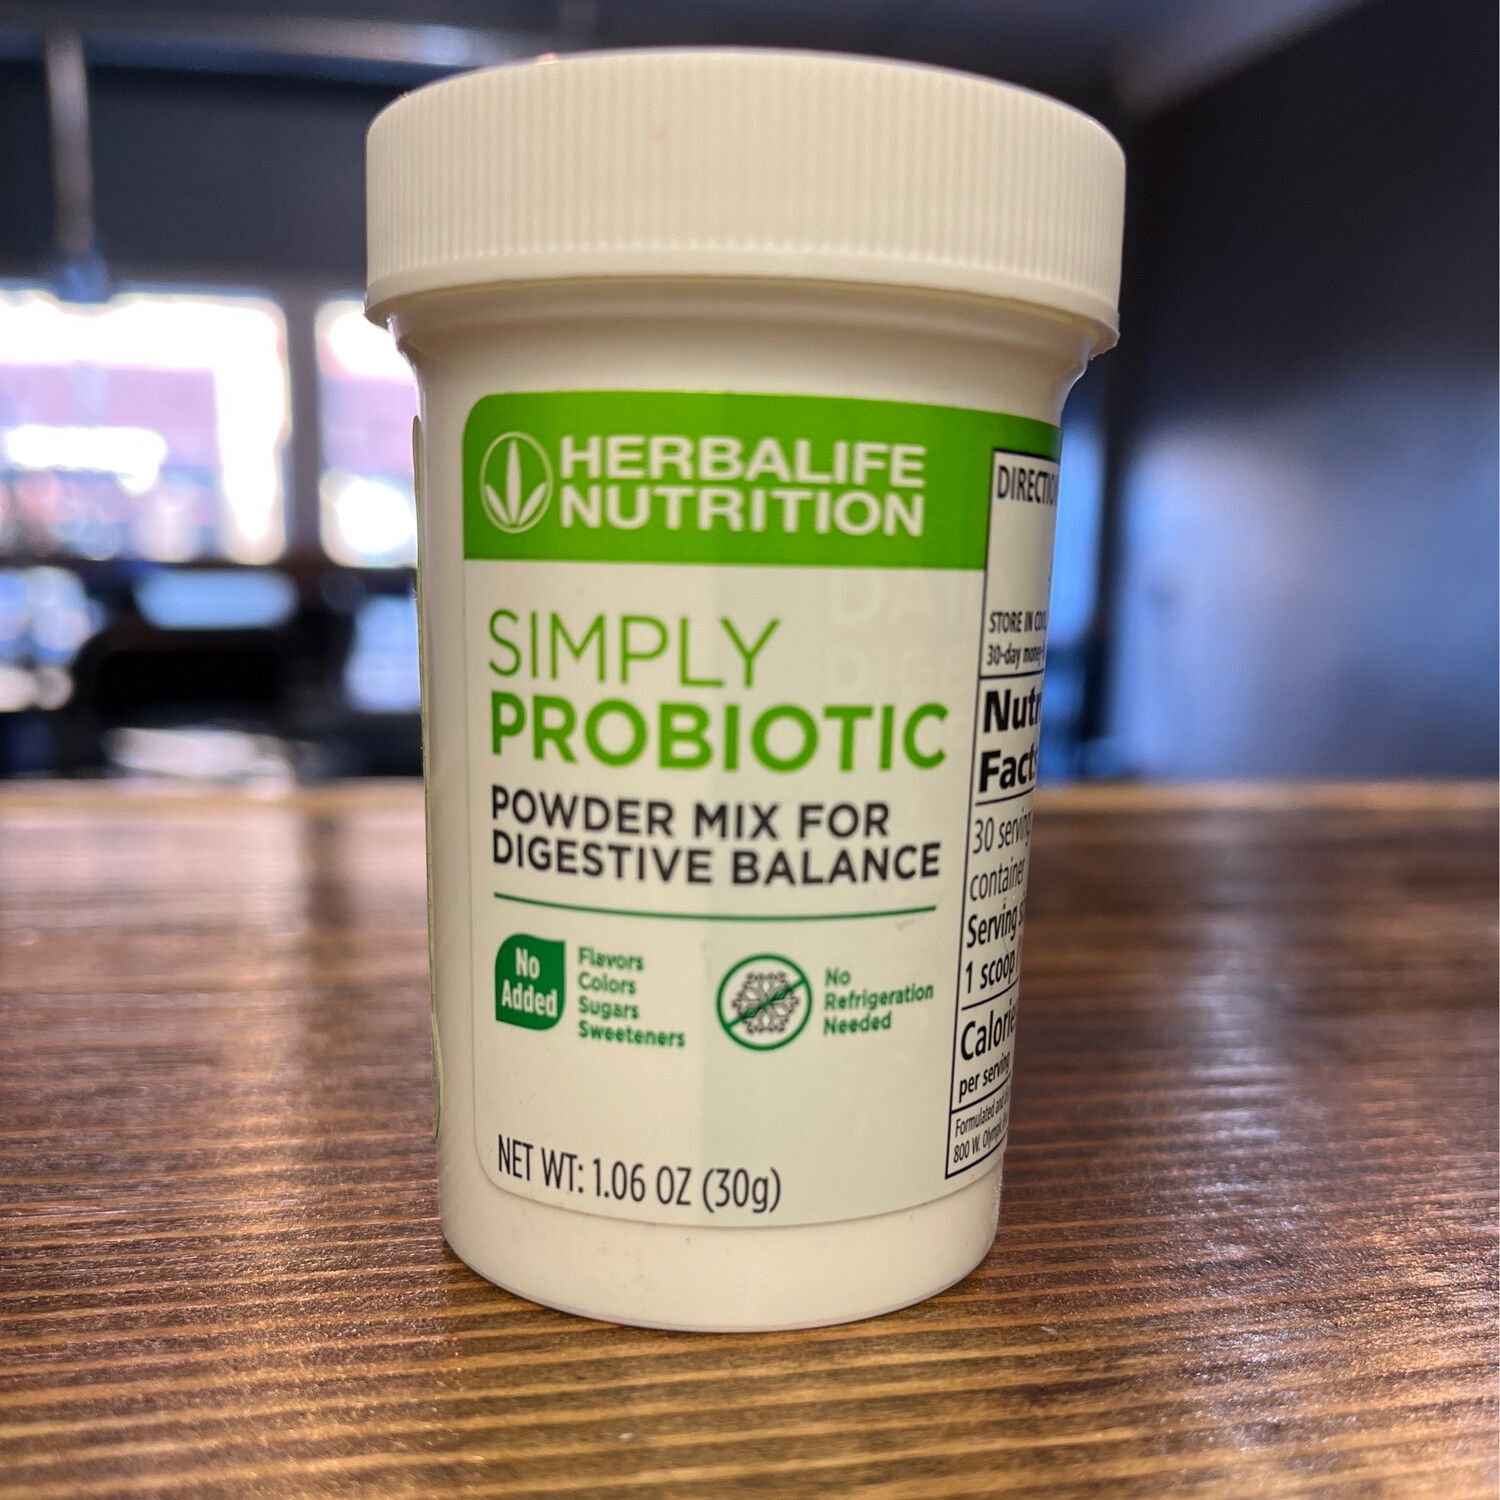 Simply Probiotic